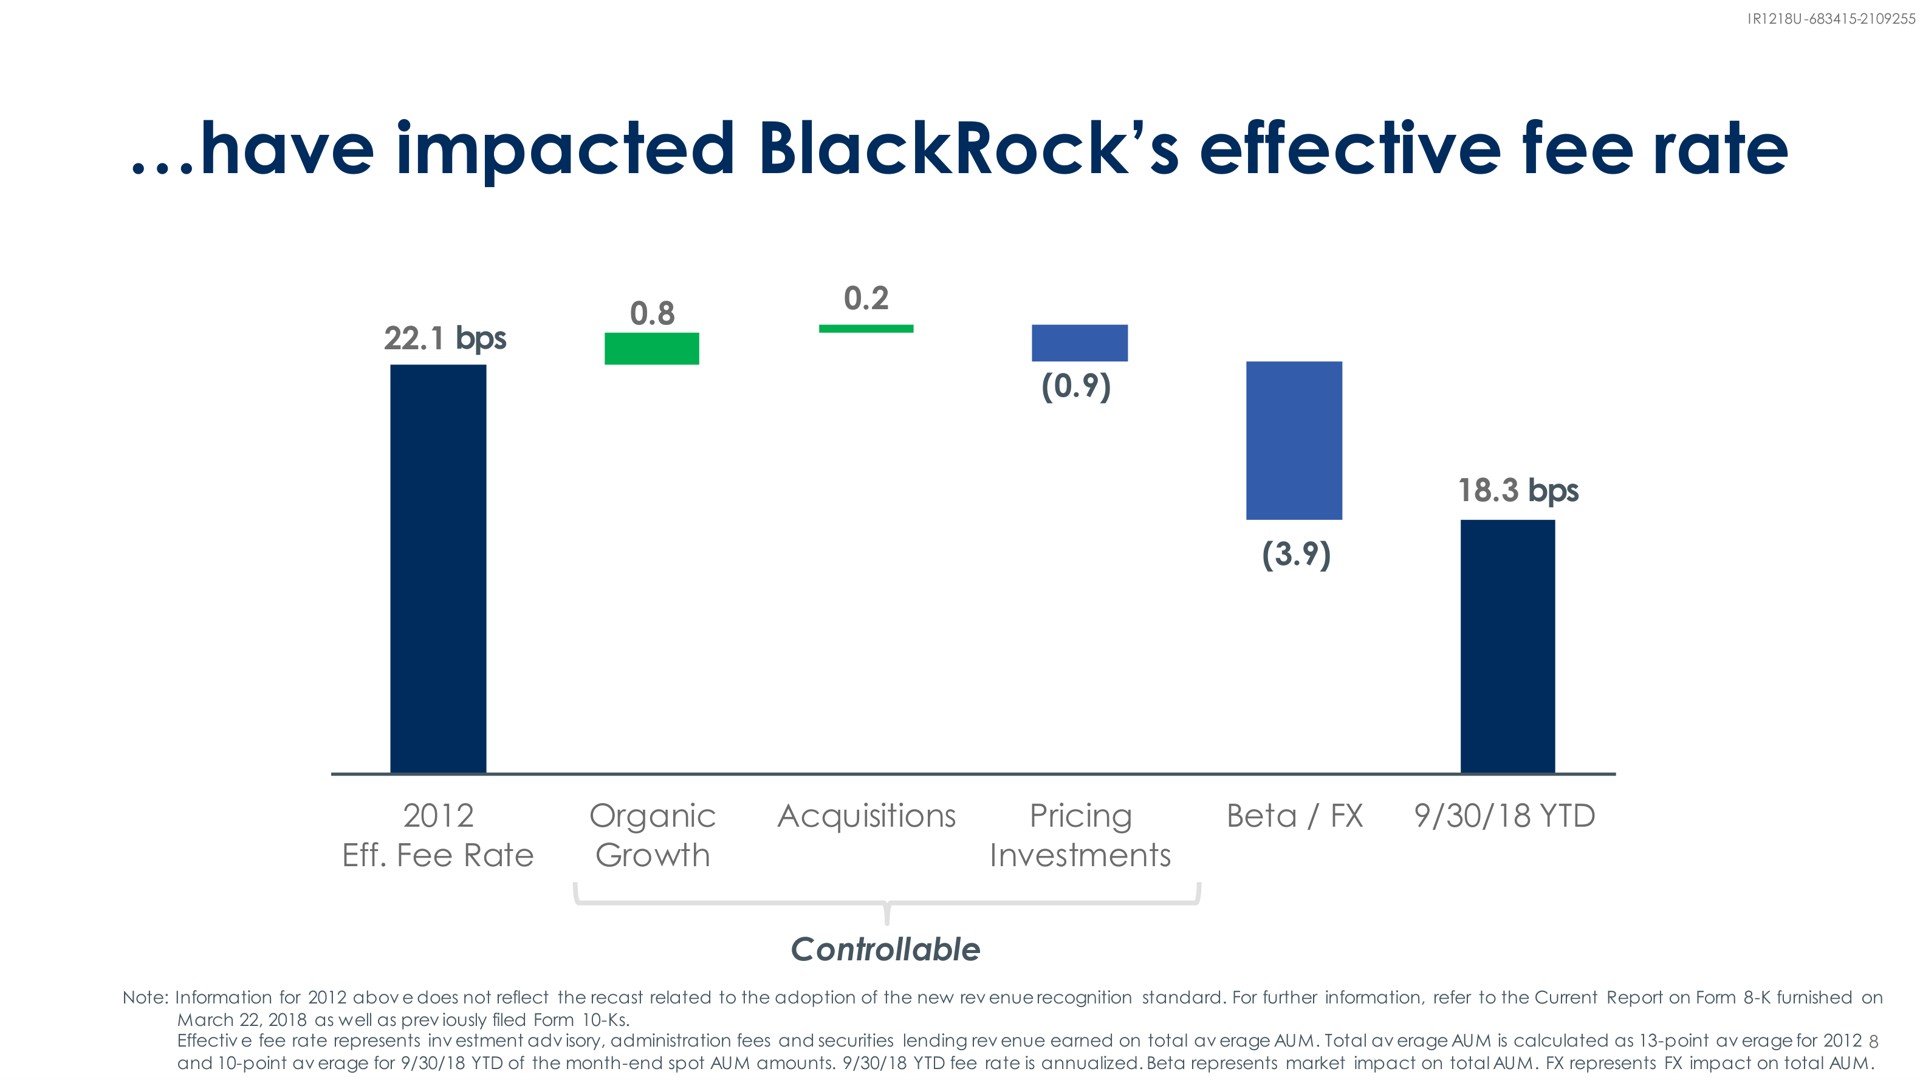 have impacted effective fee rate | BlackRock